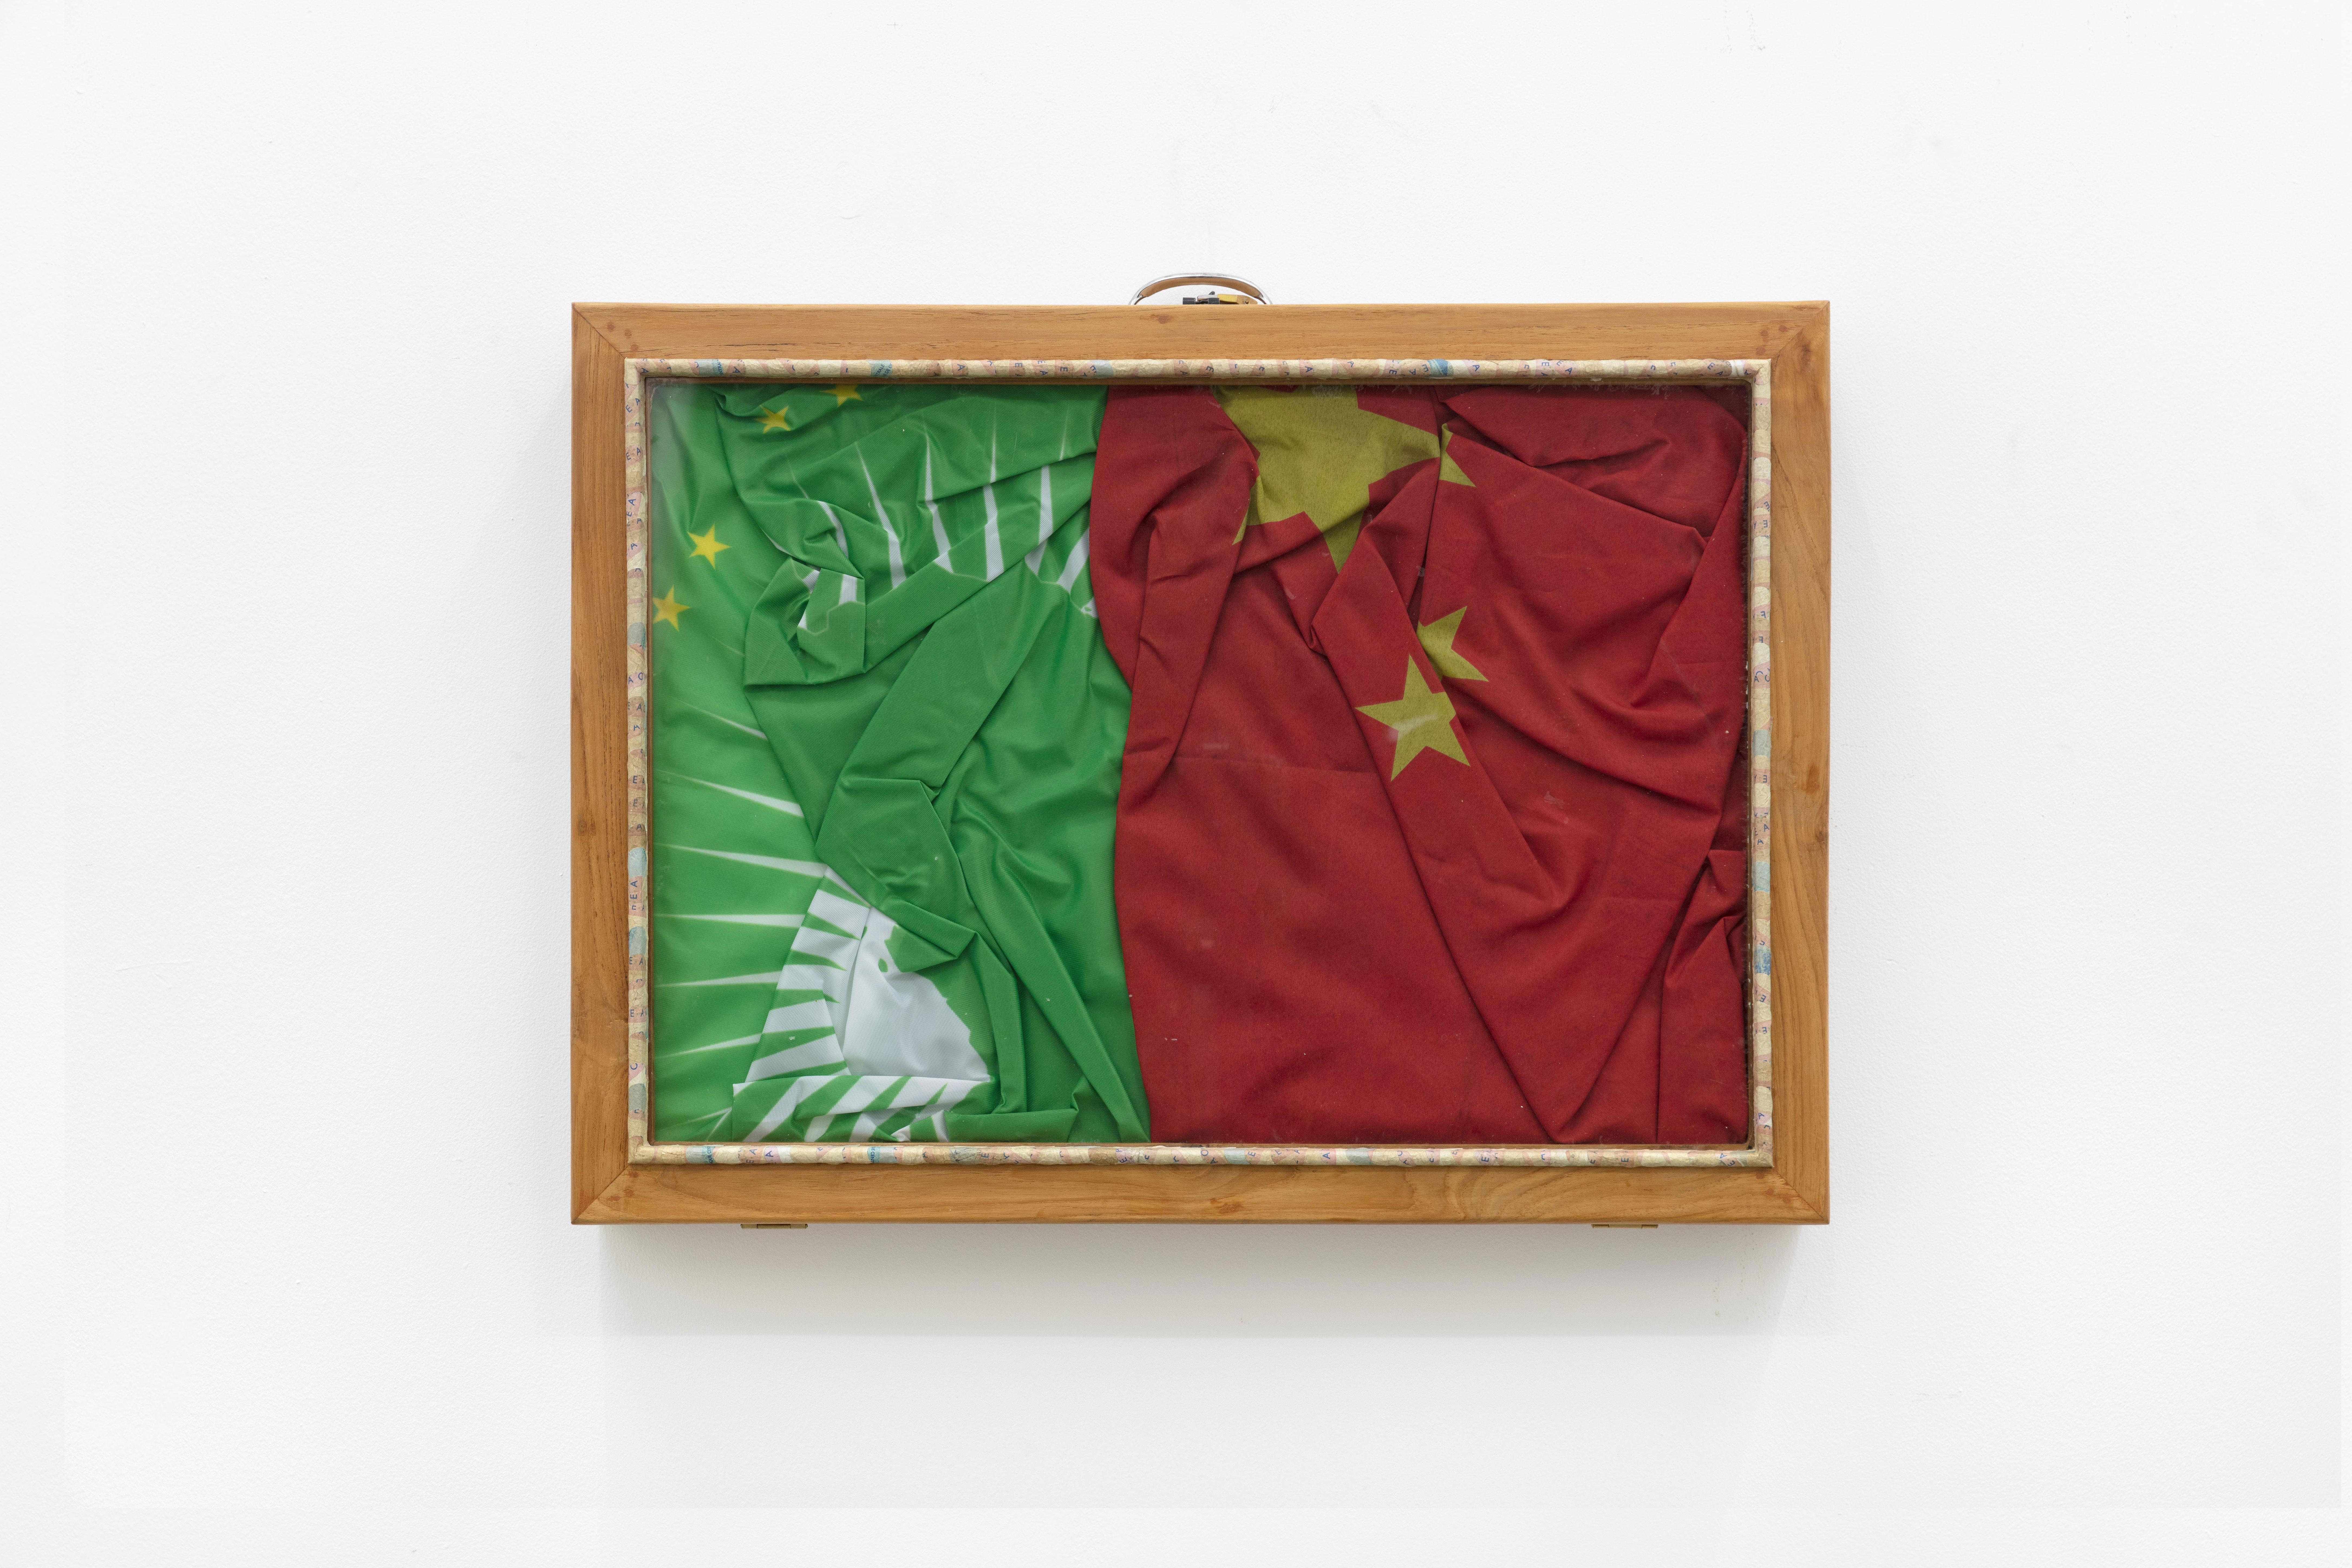  - Diplomatique (China Afrique), 2013